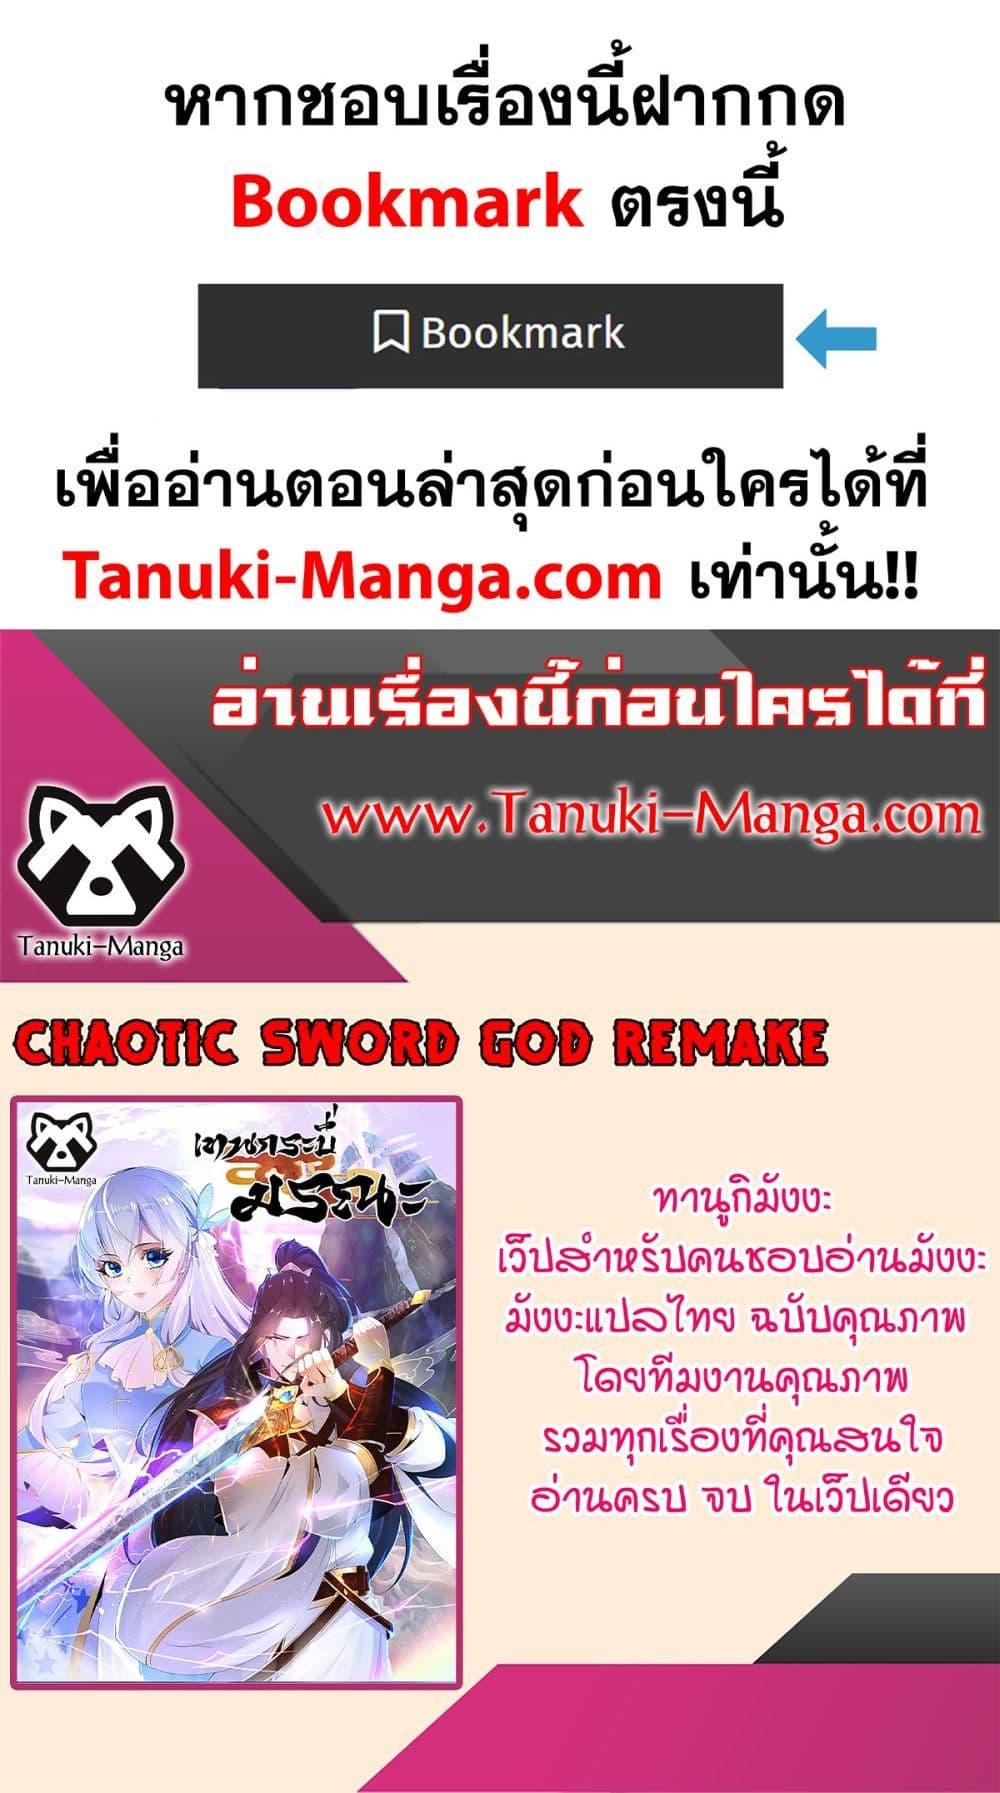 Chaotic Sword God (Remake) 60 40